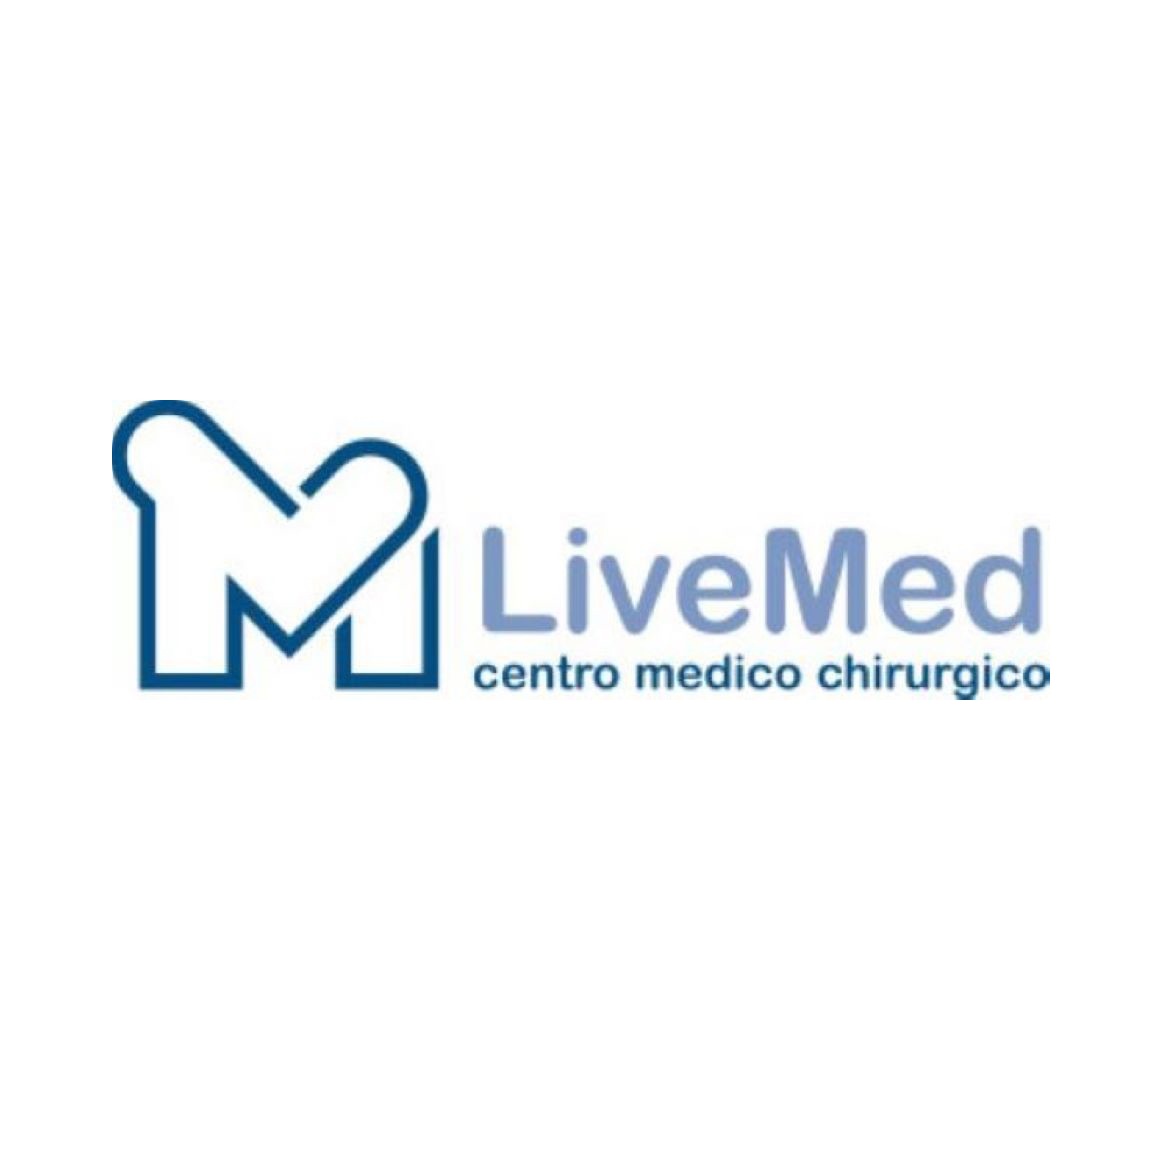 LiveMed Centro Medico